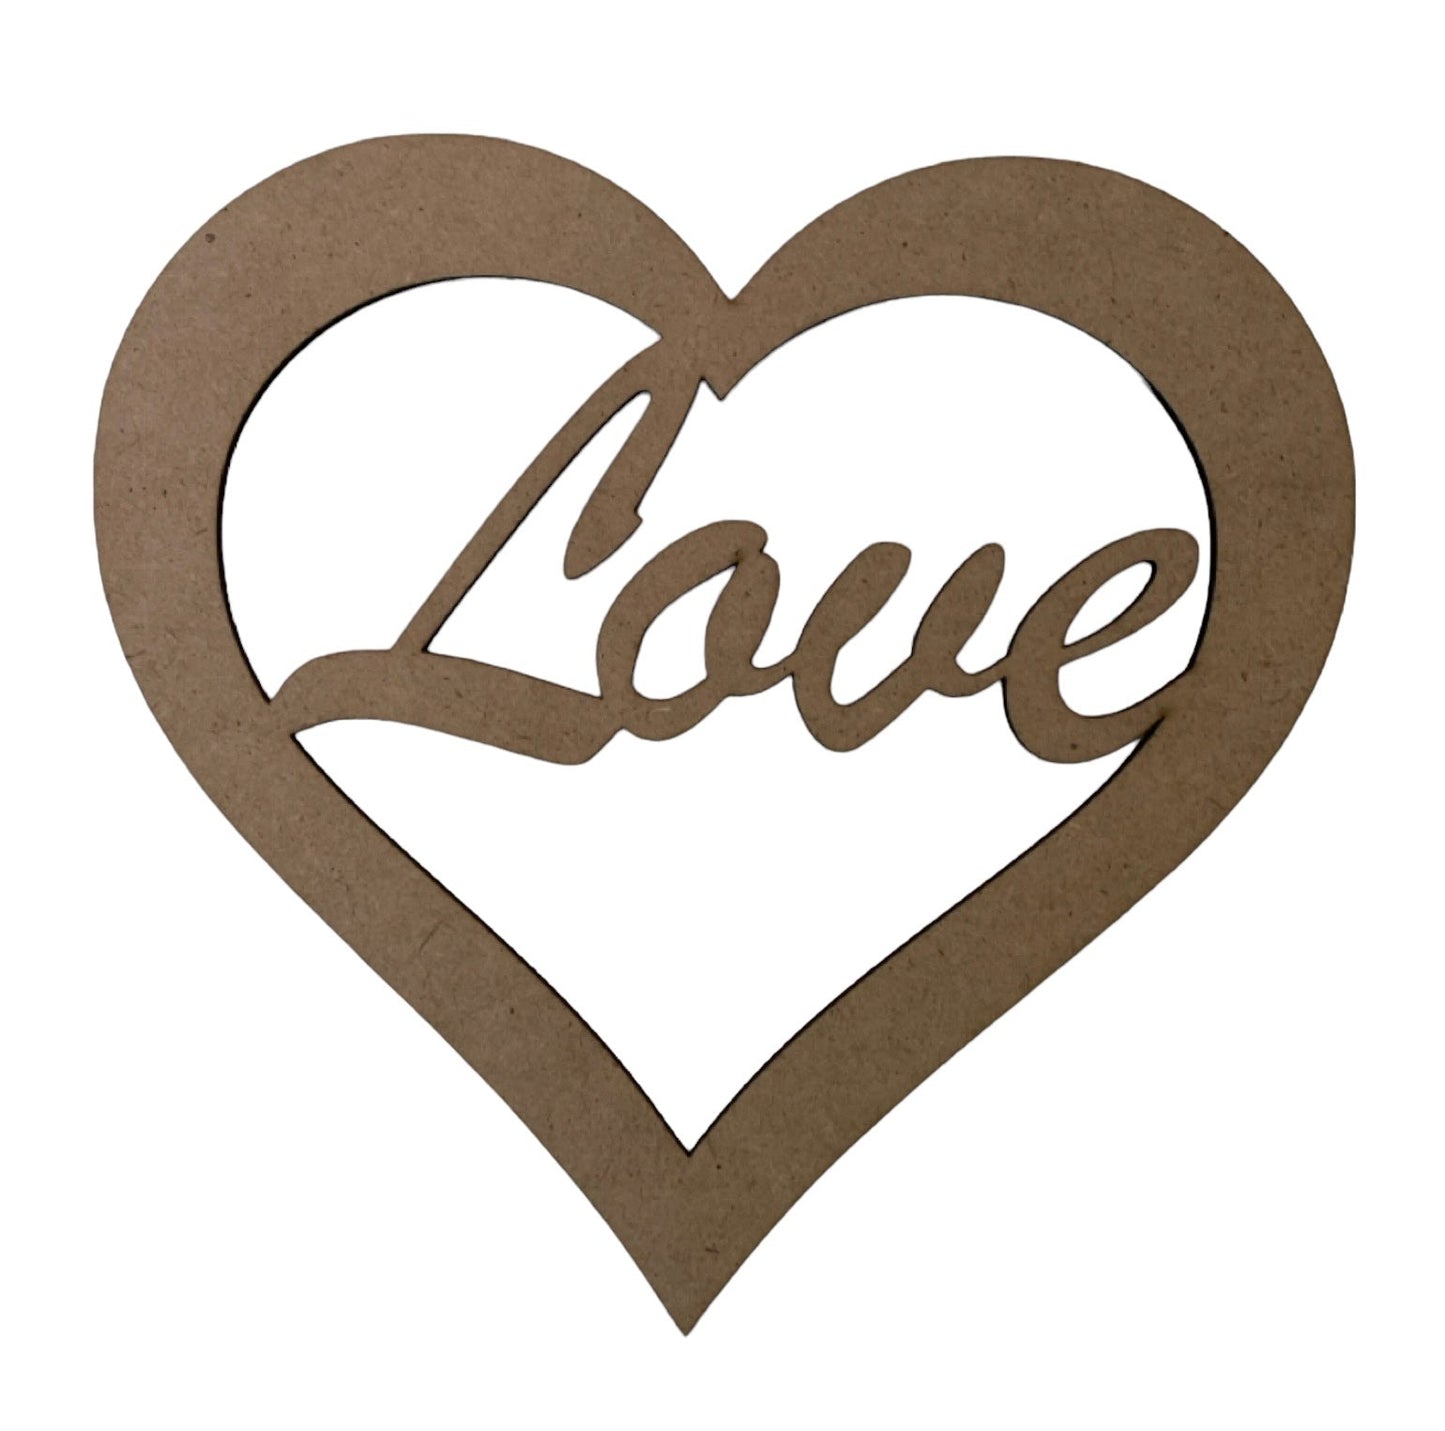 Heart Love Hearts Art Craft Mosaic Wooden MDF DIY